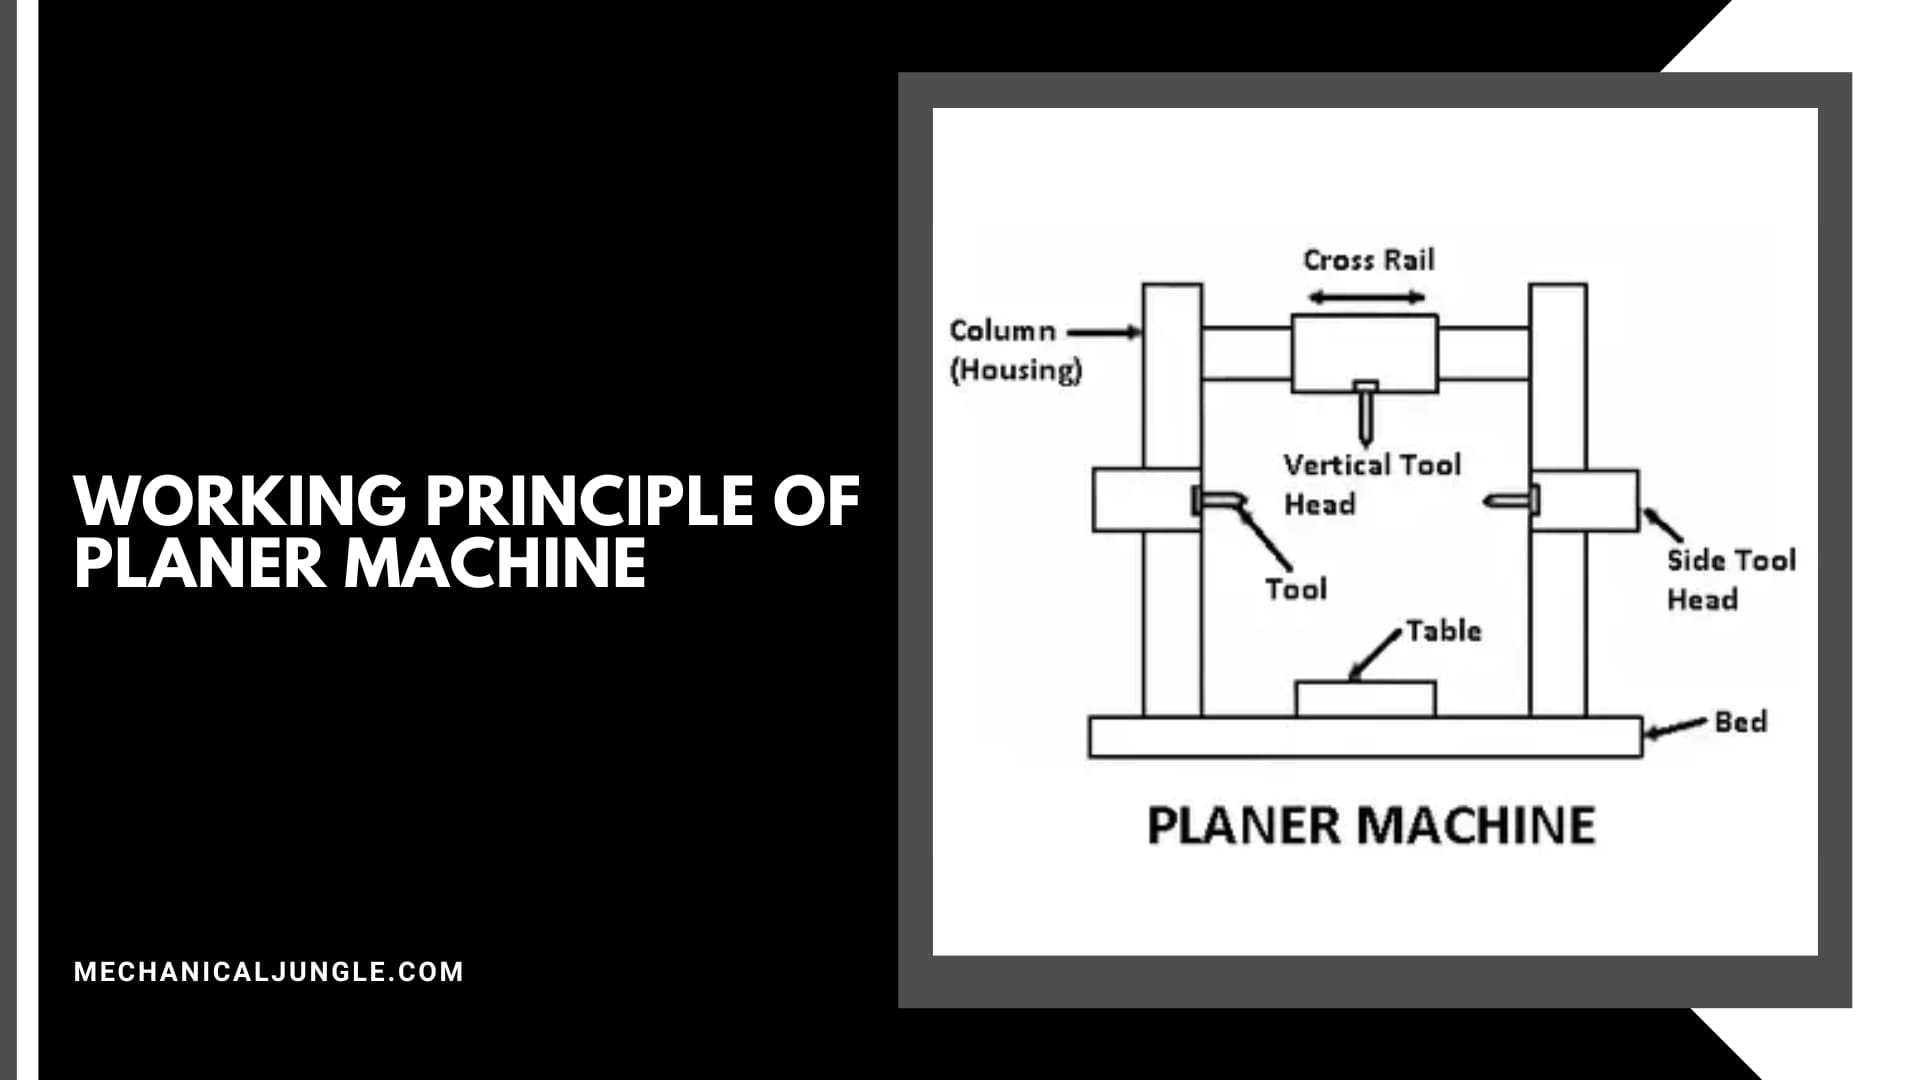 Working Principle of Planer Machine